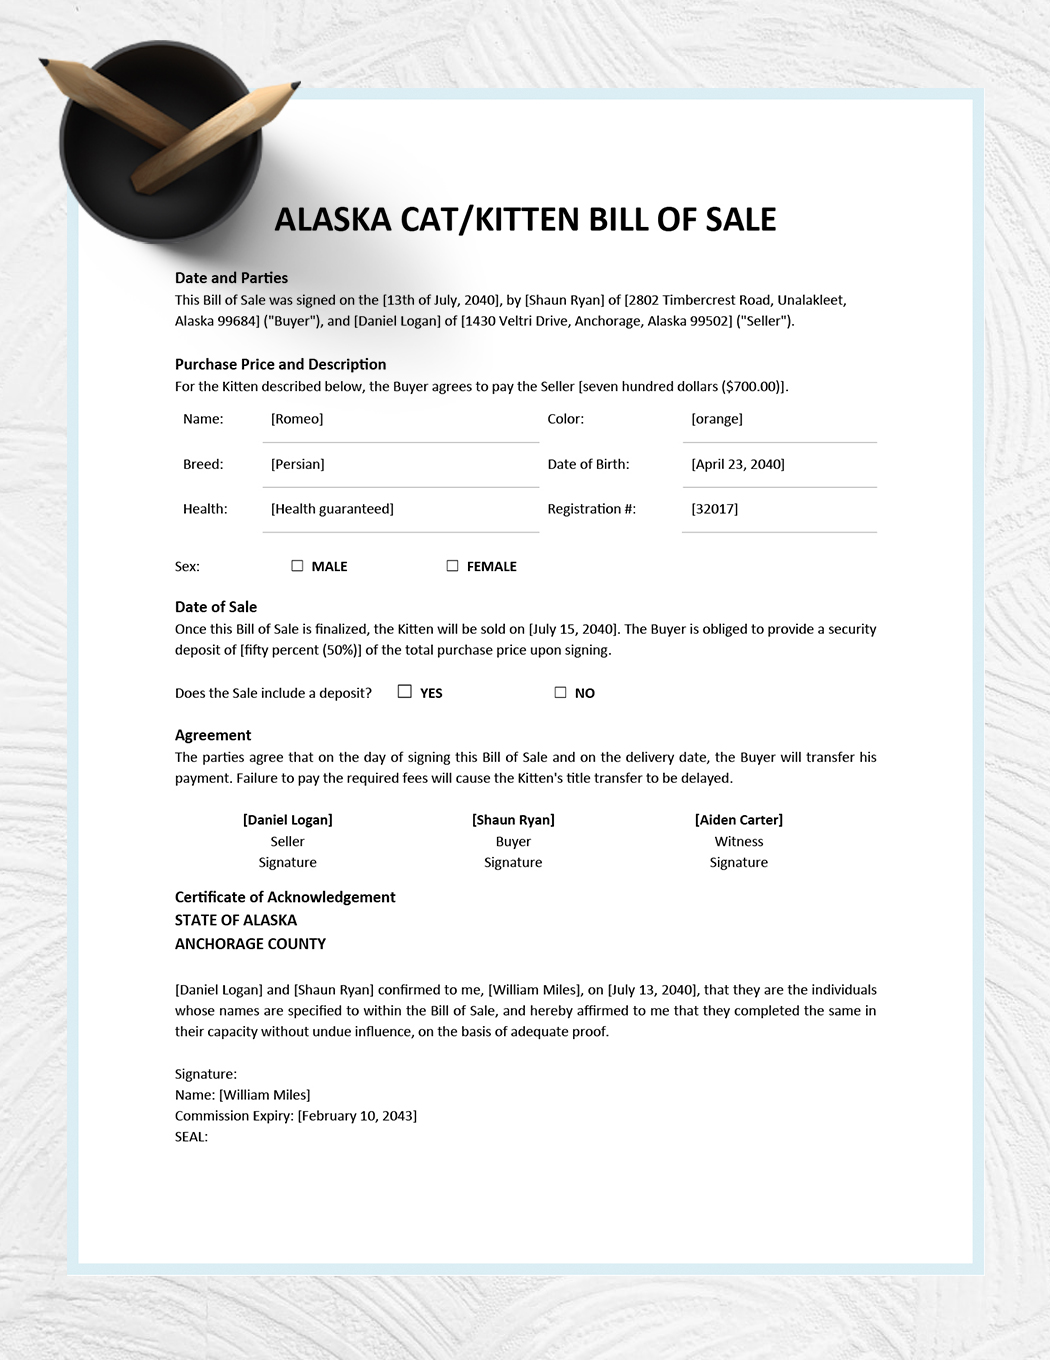 Alaska Cat / Kitten Bill of Sale Template